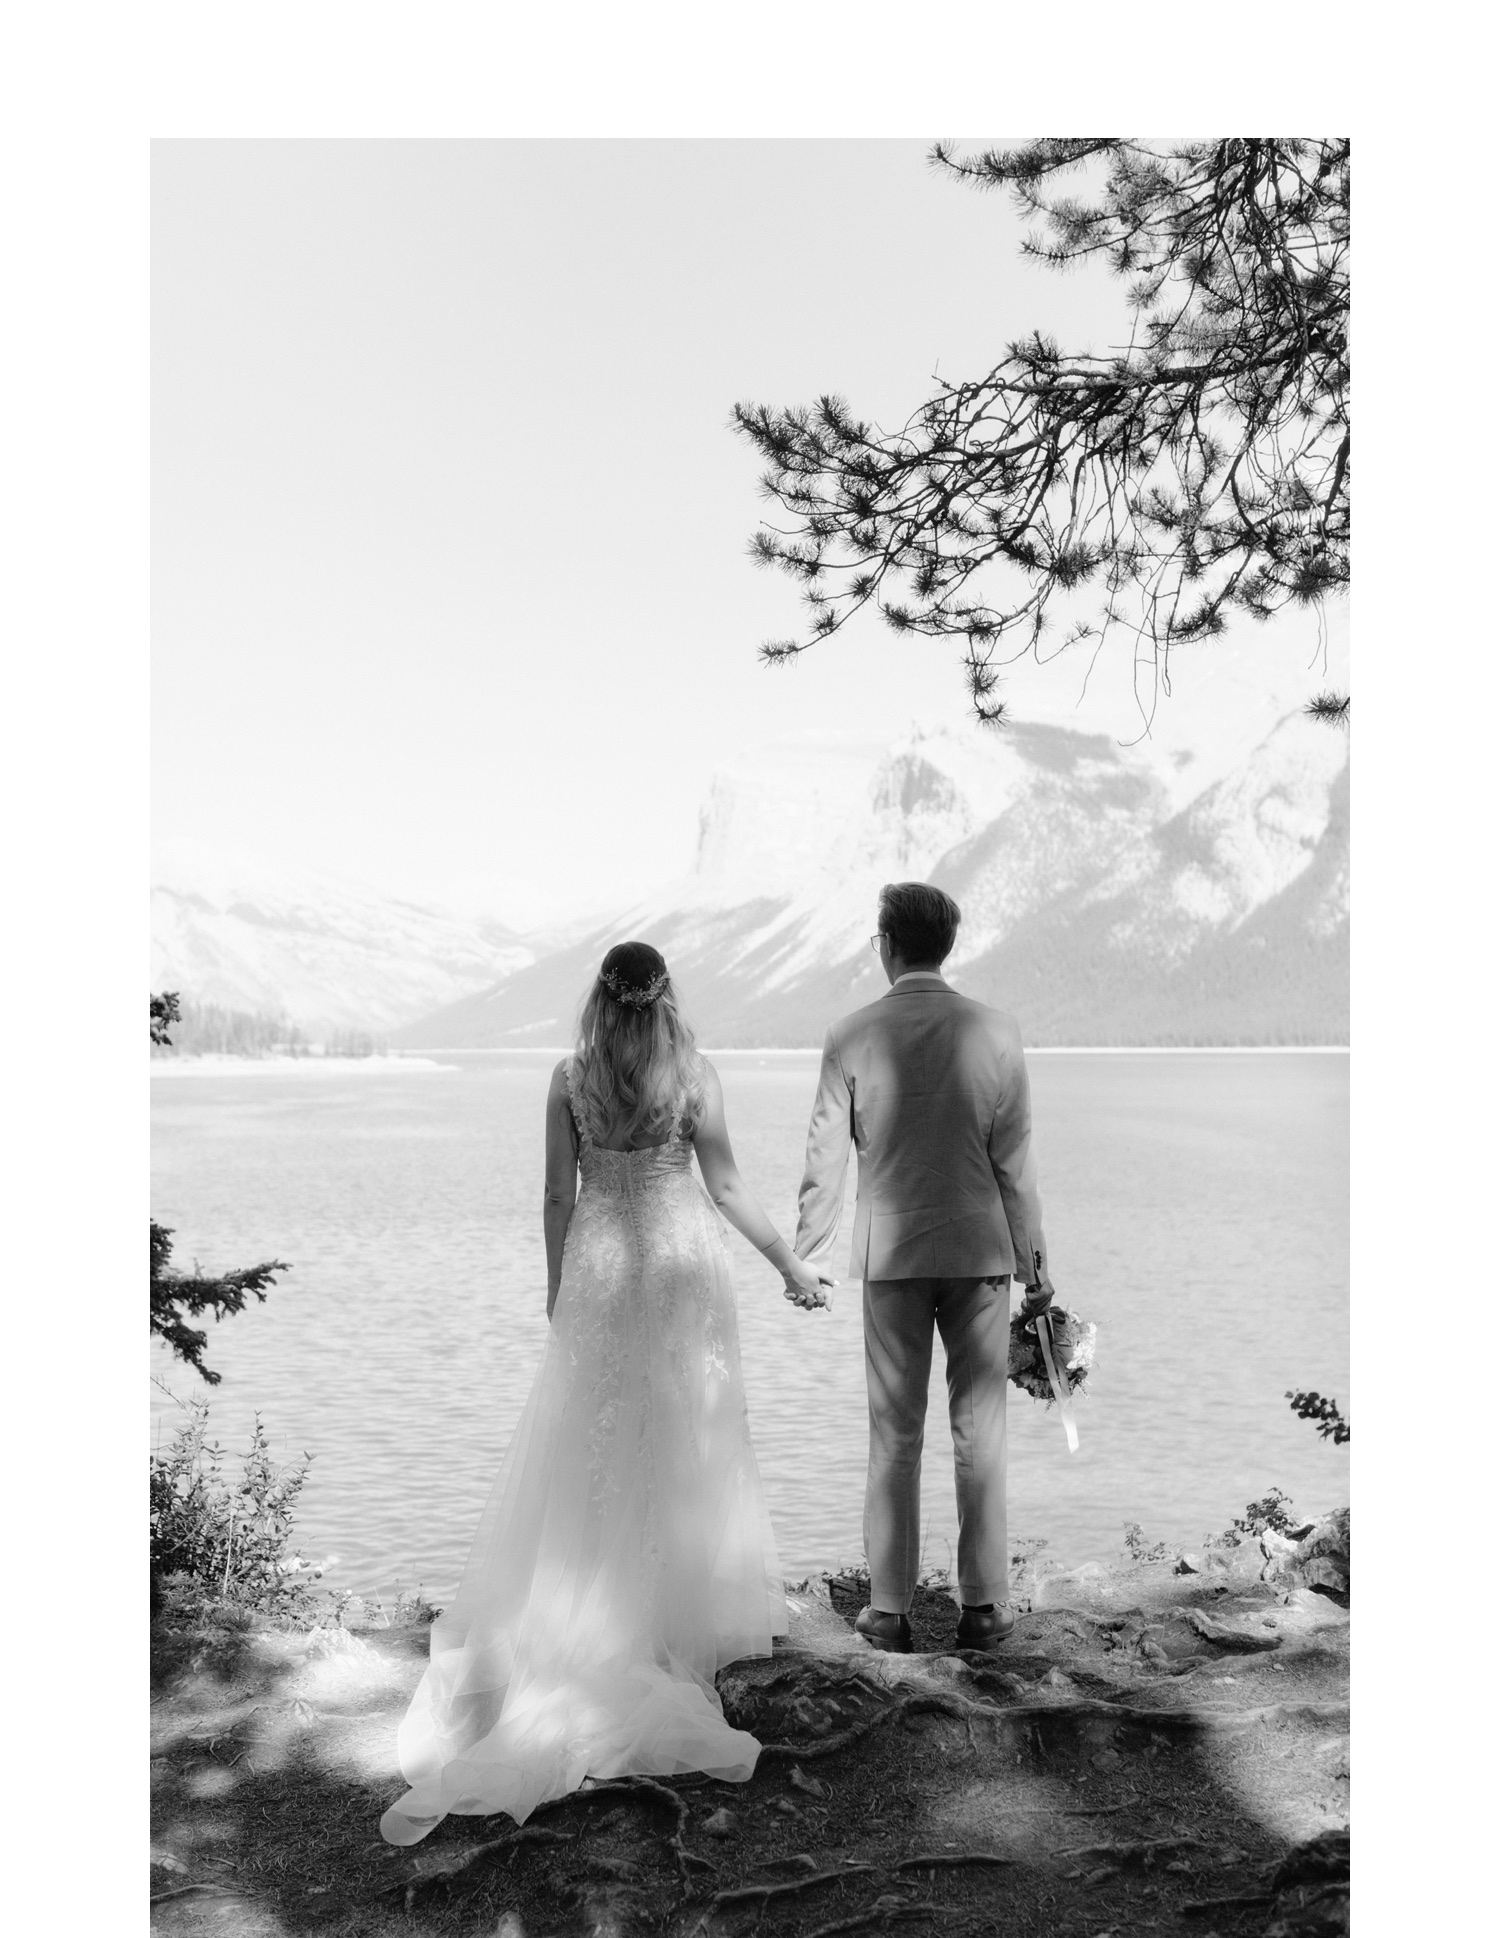 Midday summer wedding portraits at Lake Minnewanka in Banff National Park